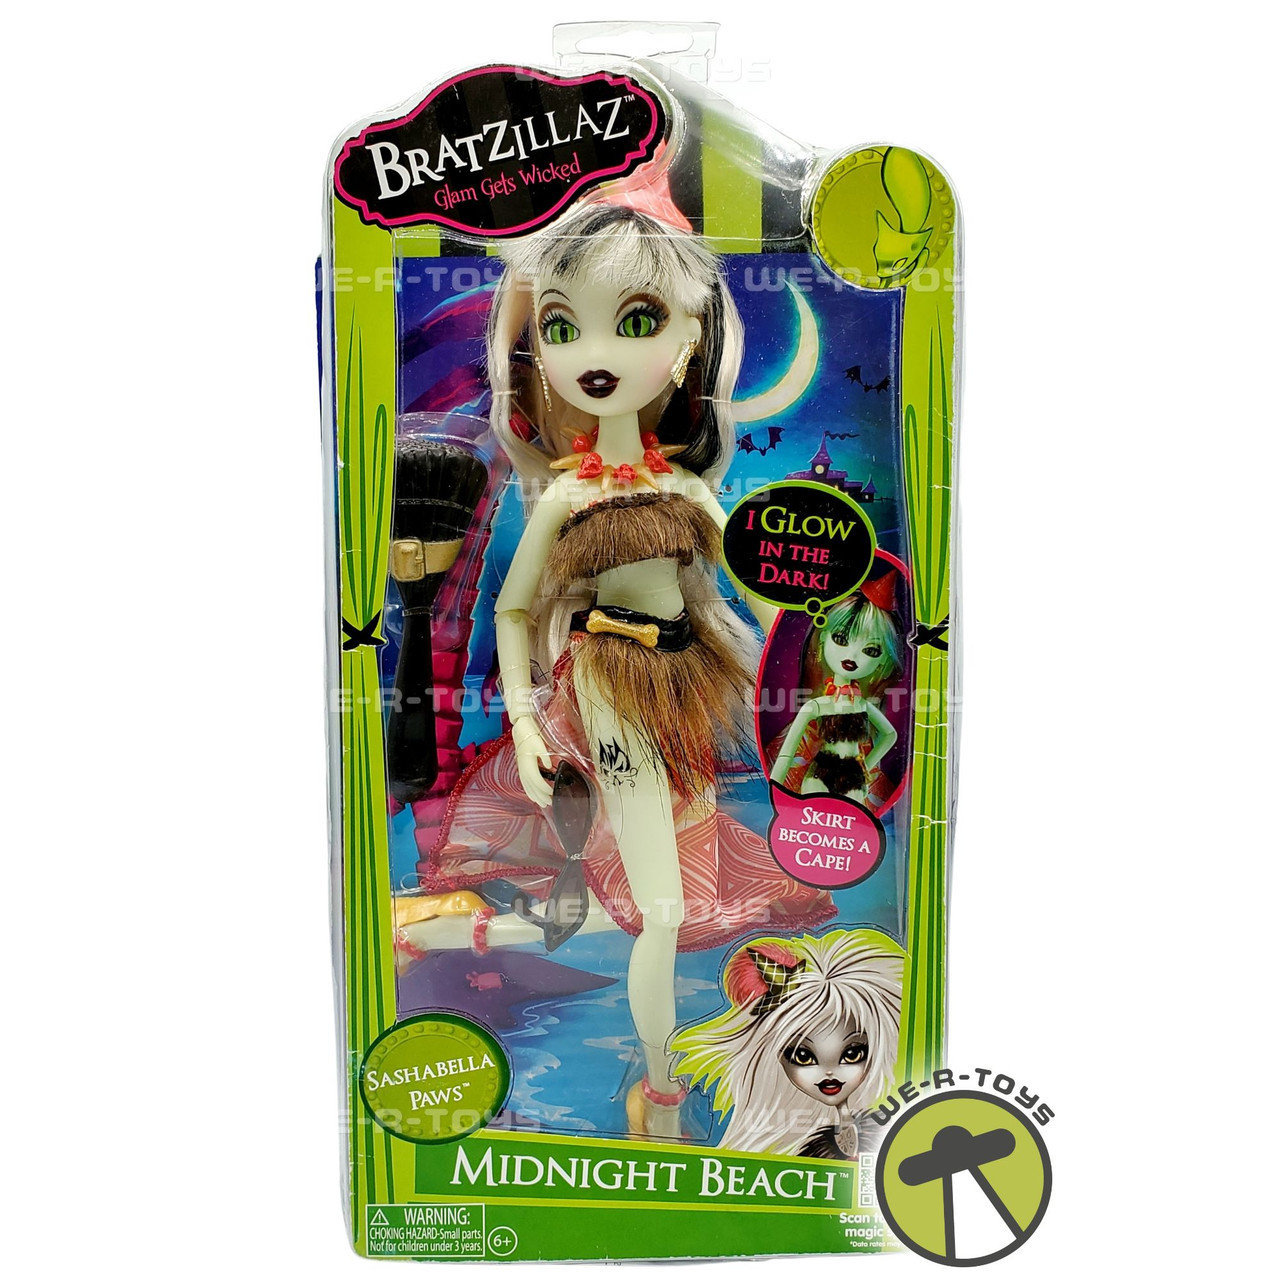 Bratzillaz Midnight Beach Sashabella Paws Glows in the Dark 2013 NRFB -  We-R-Toys